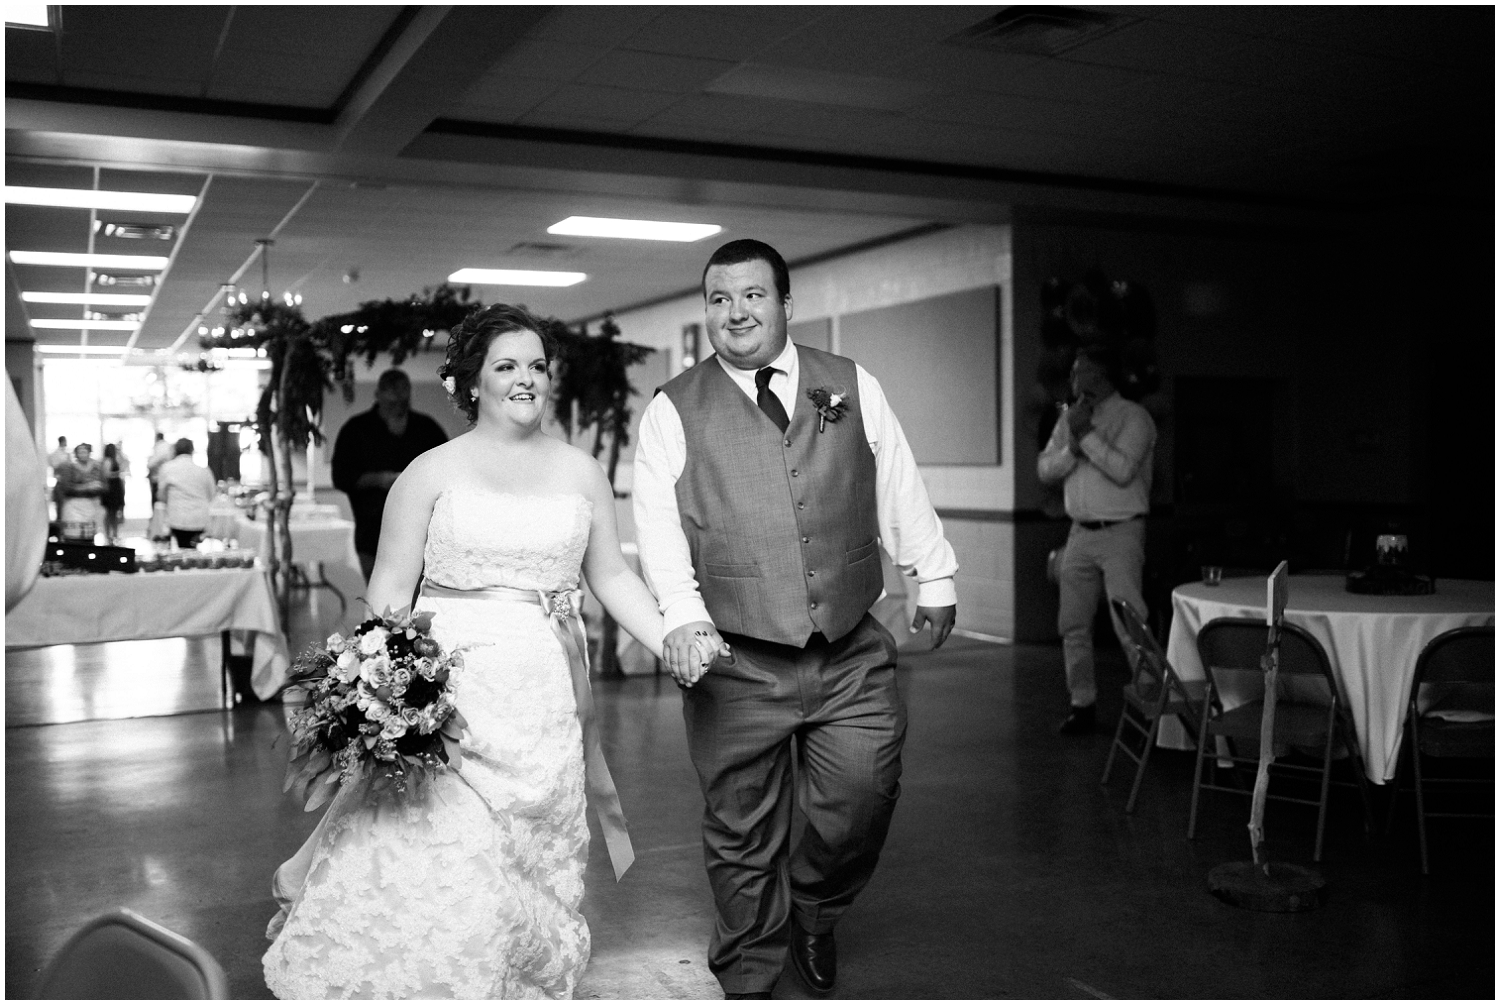 Ohio Wedding Photographer | Chelsea Hall Photography | www.chelsea-hall.com